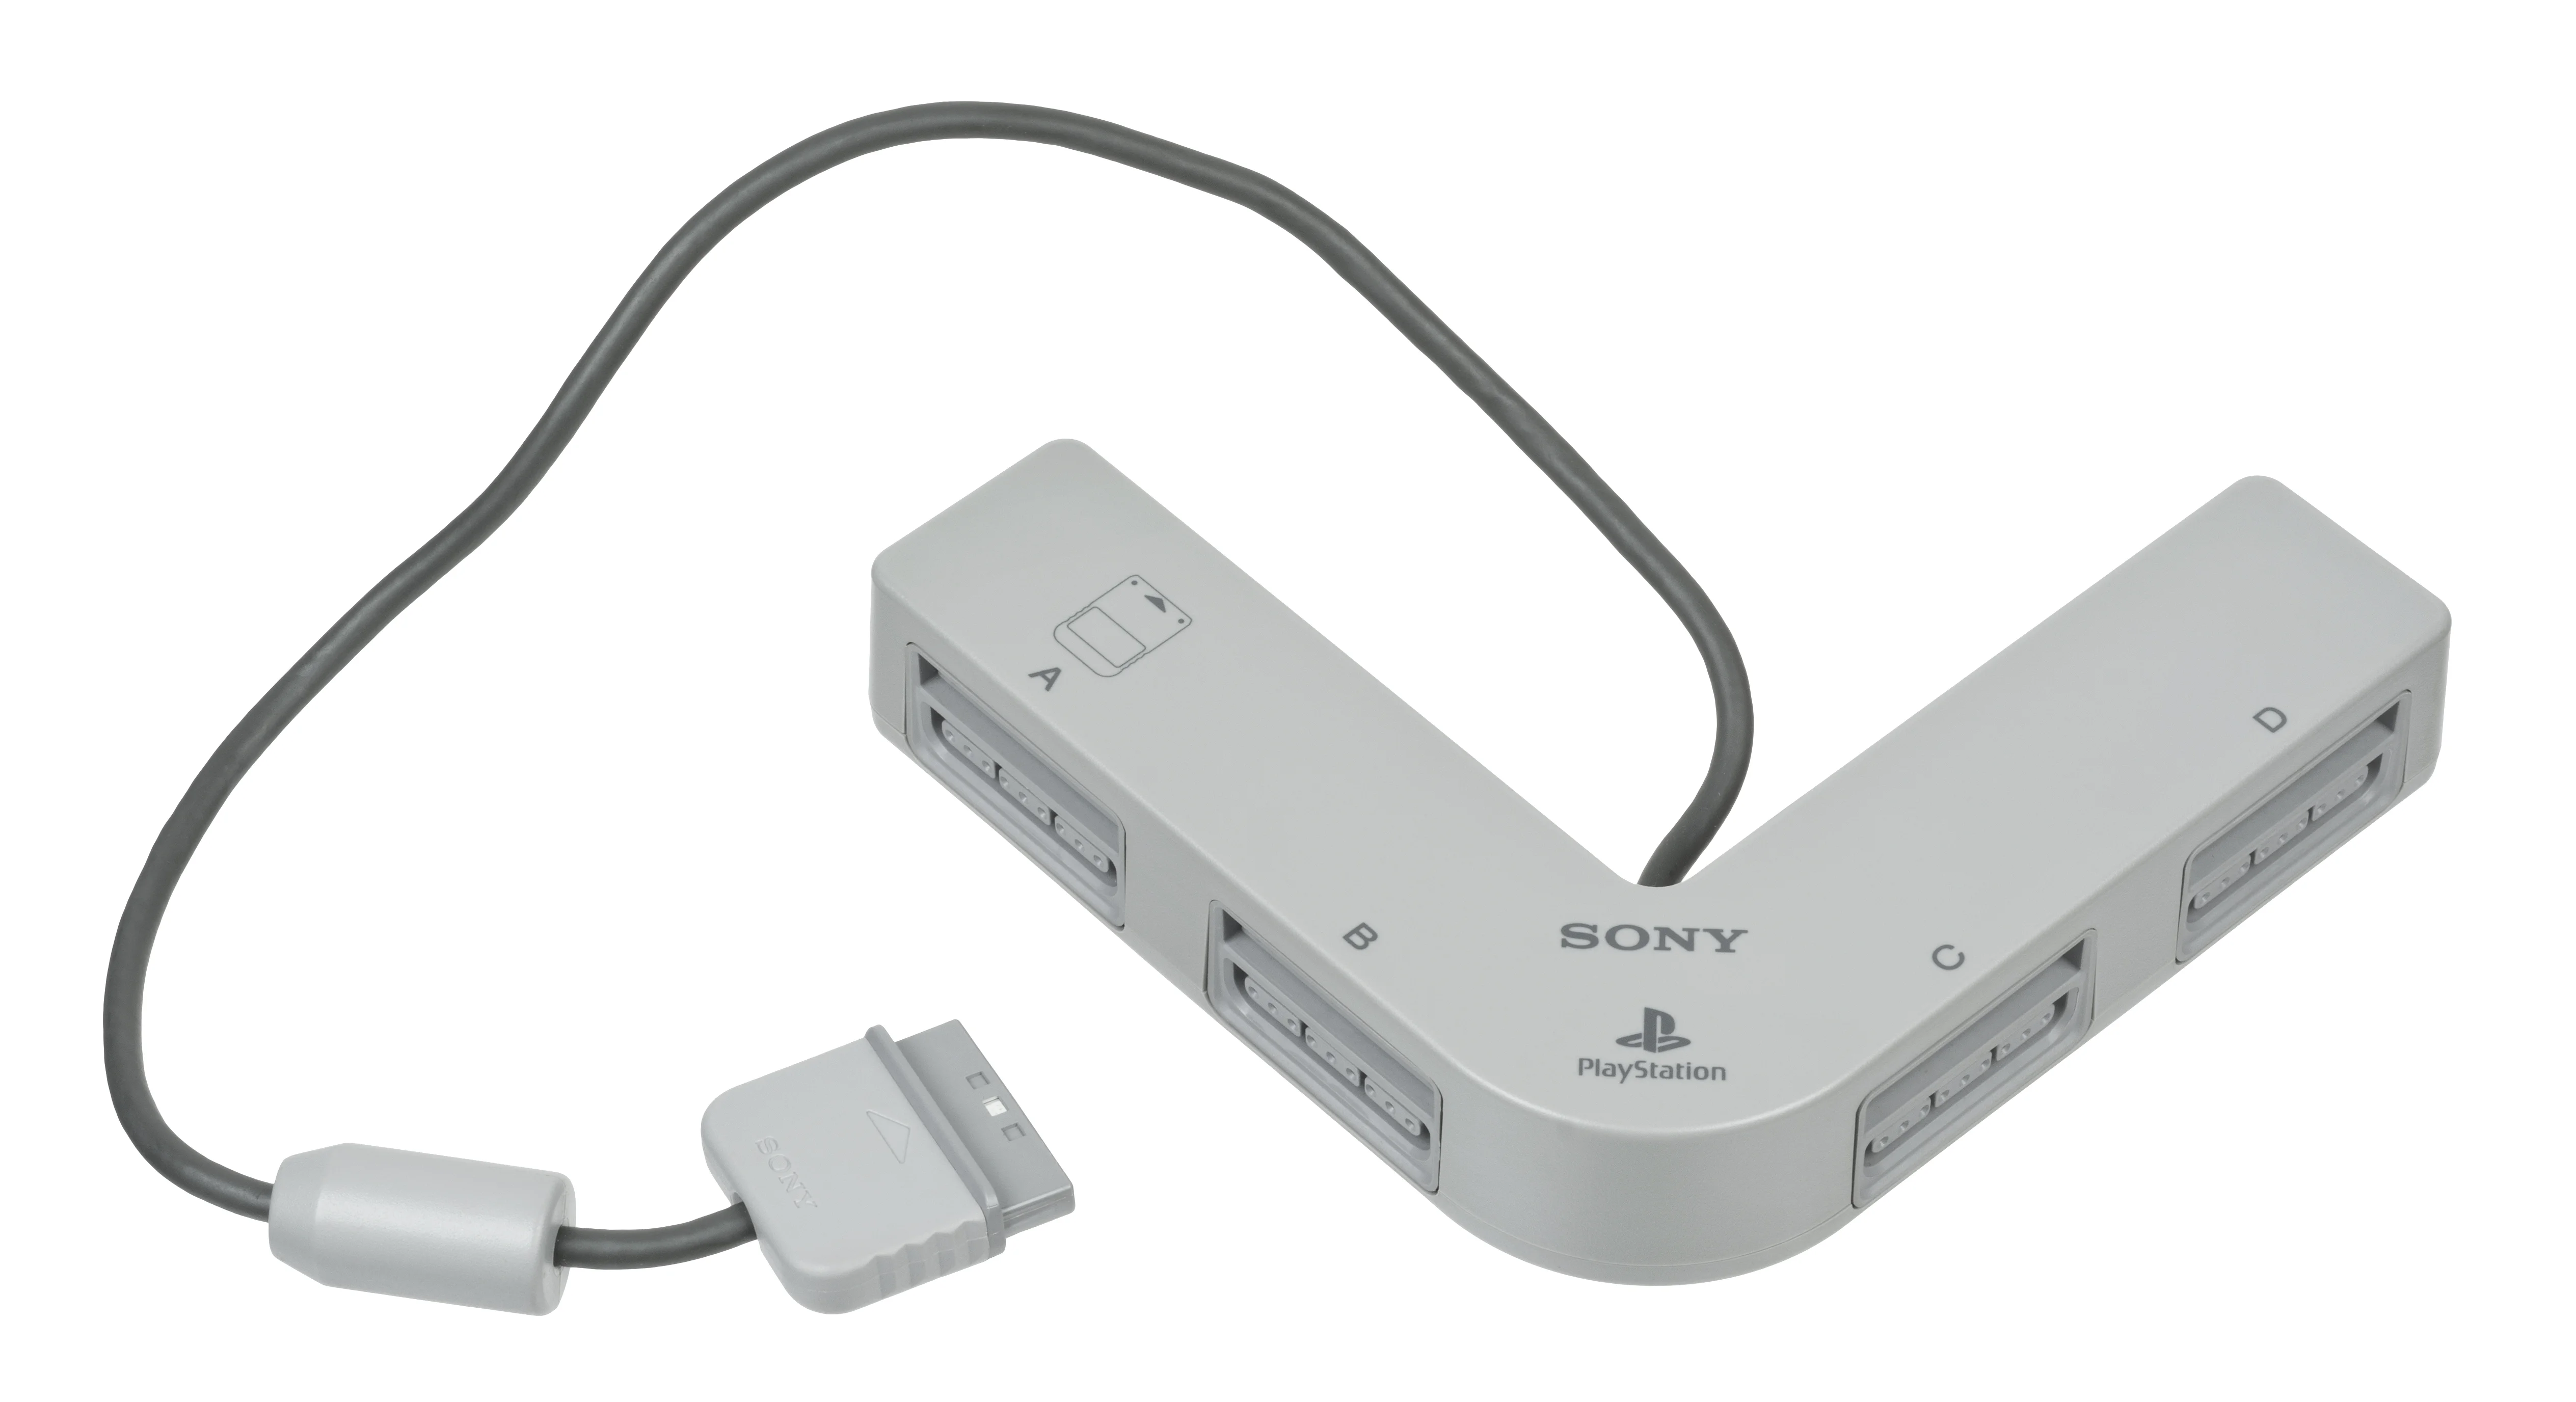  Sony PlayStation Multitap [JP]